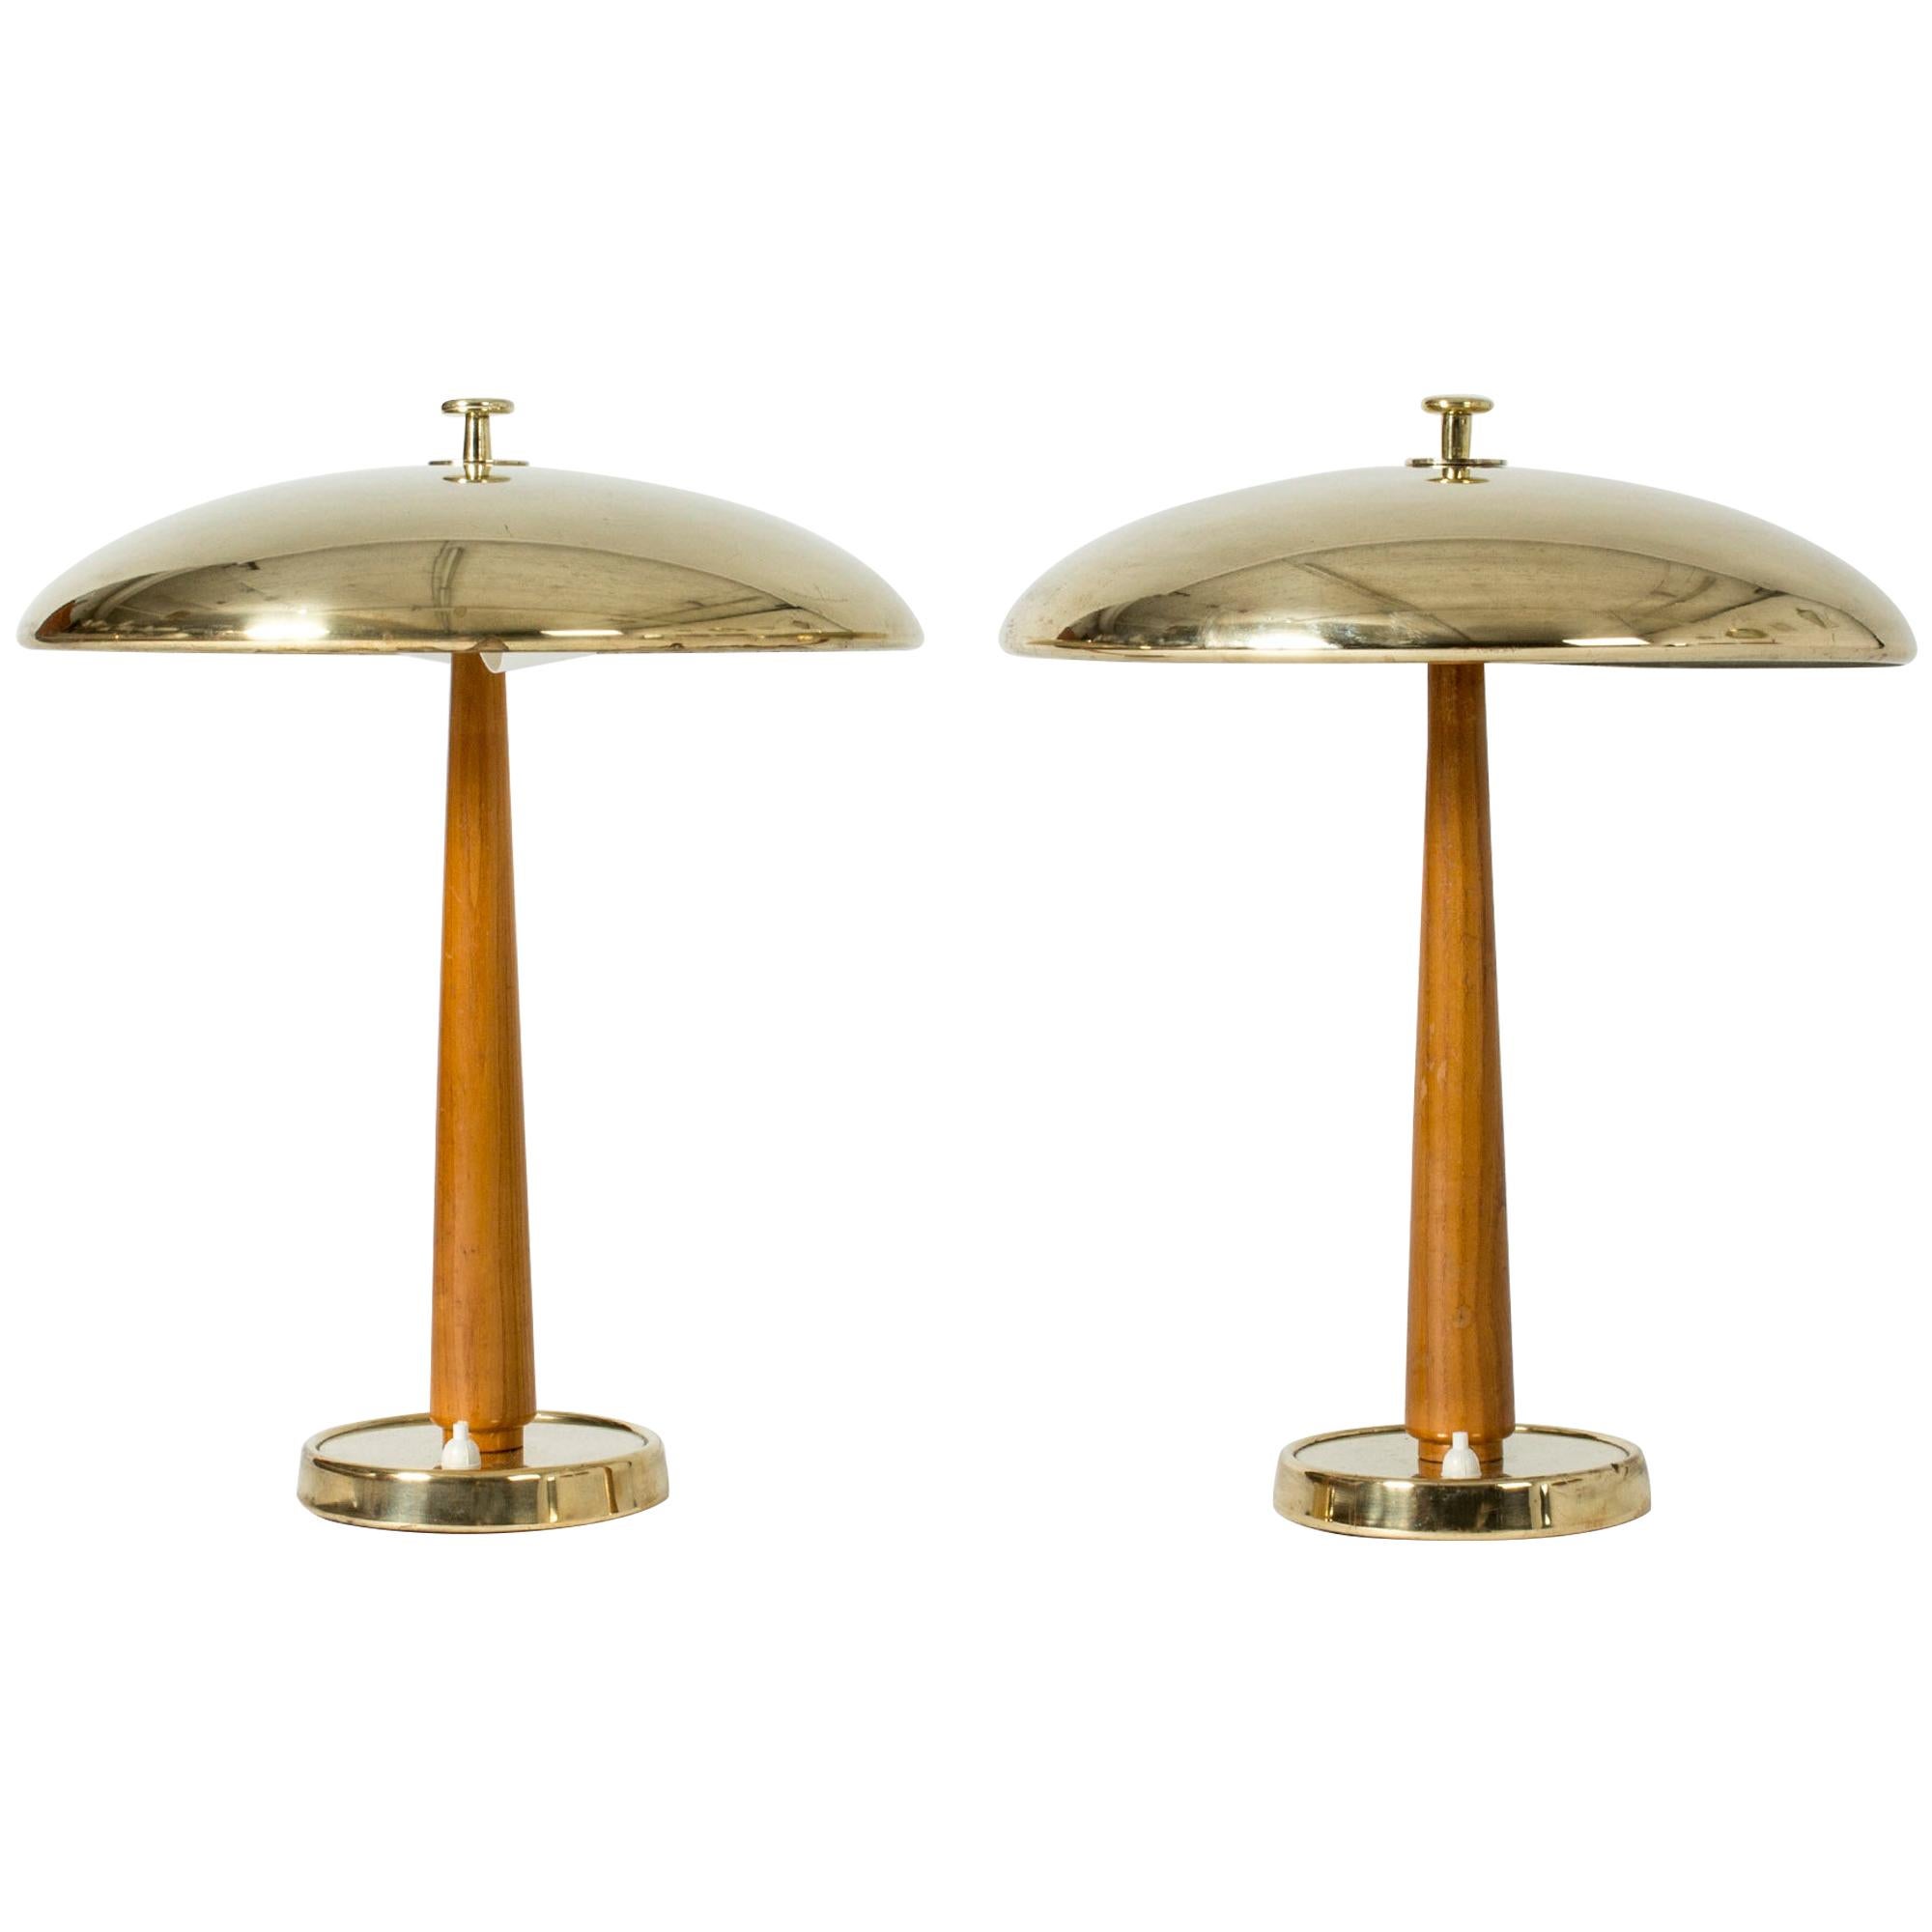 Pair of Swedish Modern Brass and Wood Table Lamps from Nordiska Kompaniet